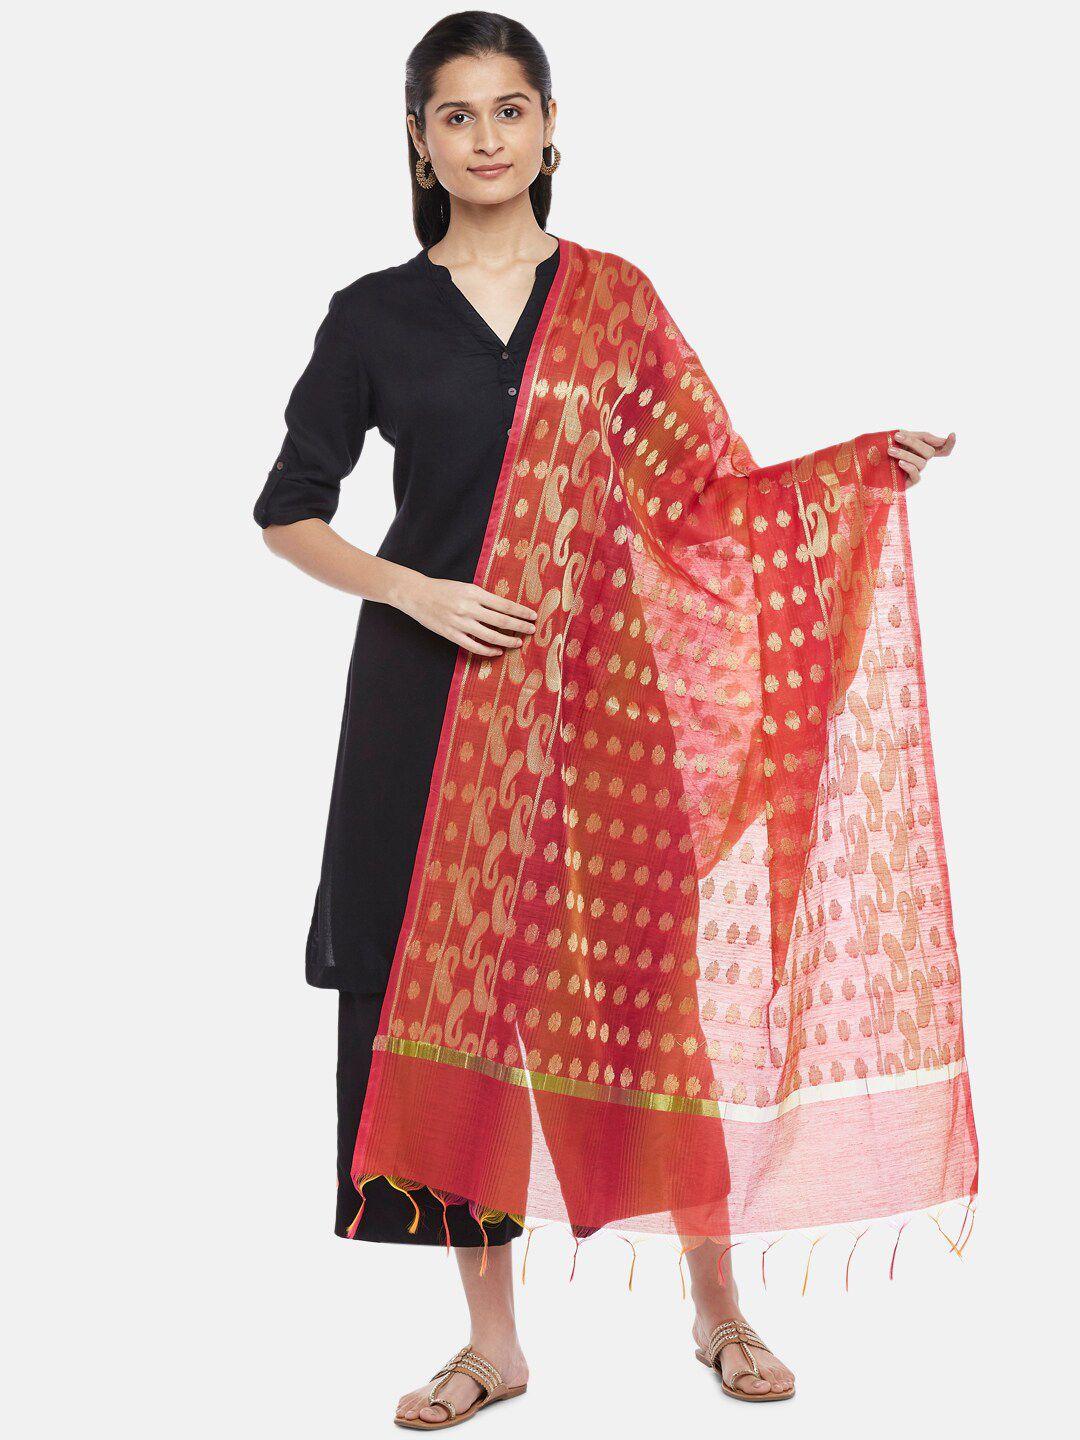 rangmanch by pantaloons women red & gold-toned woven design dupatta